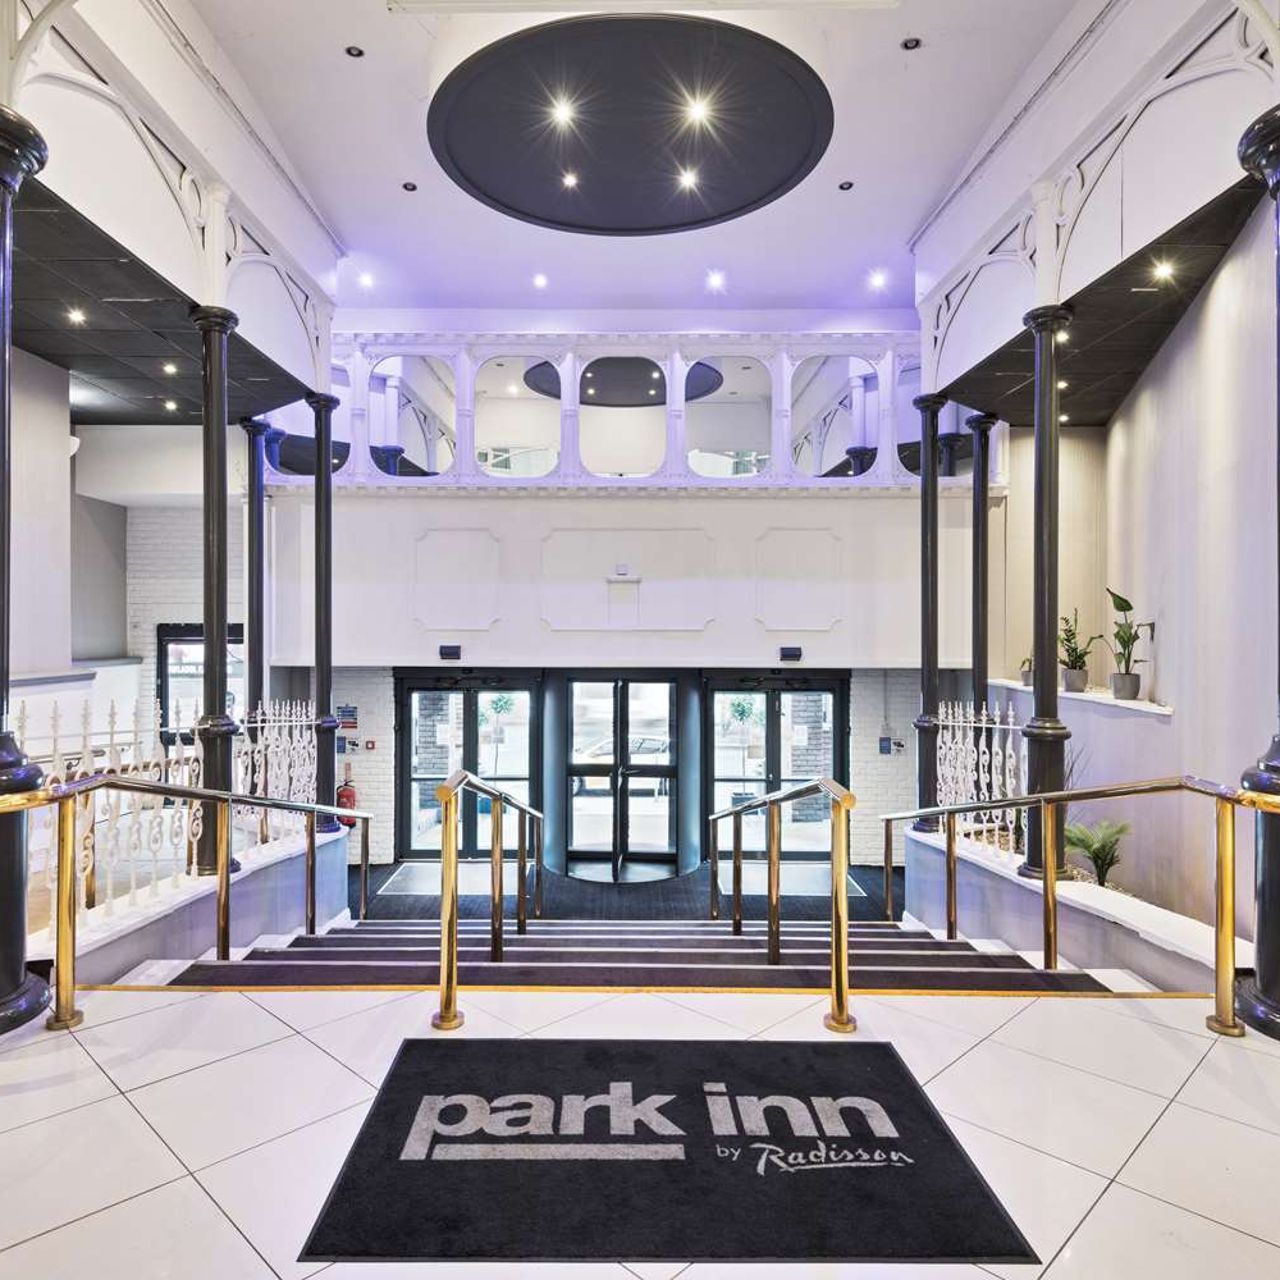 Park Inn by Radisson Hotel in Cardiff City Centre